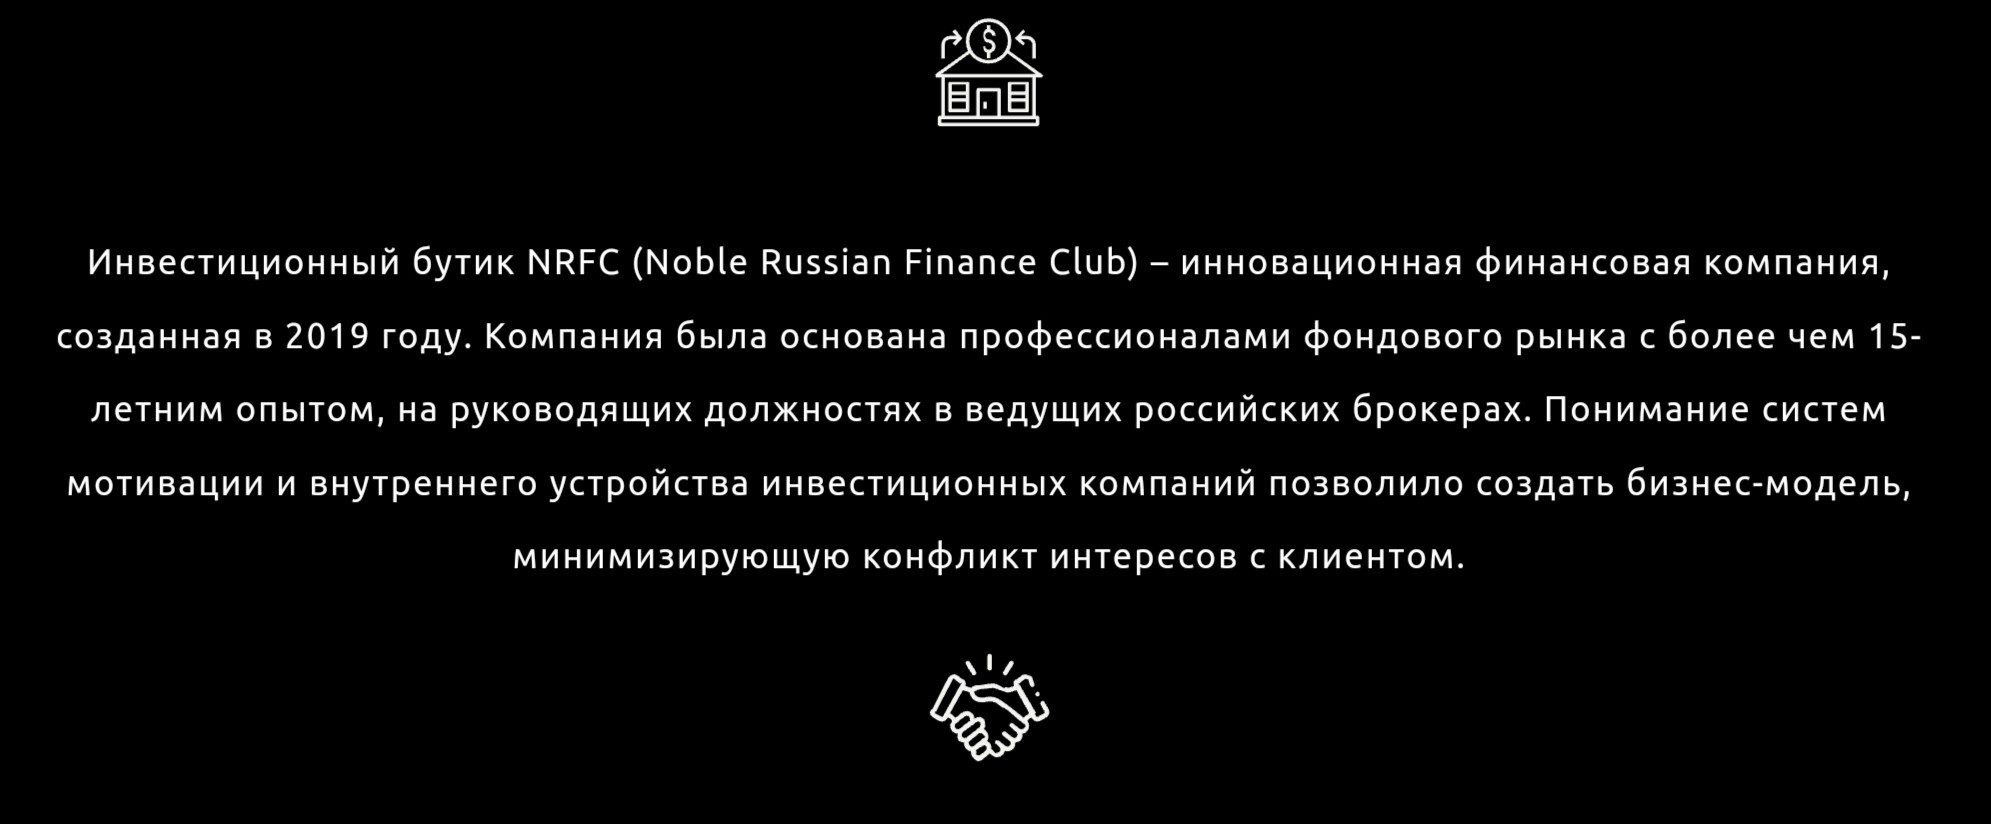 NOBLE RUSSIAN FINANCE CLUB обзор проекта